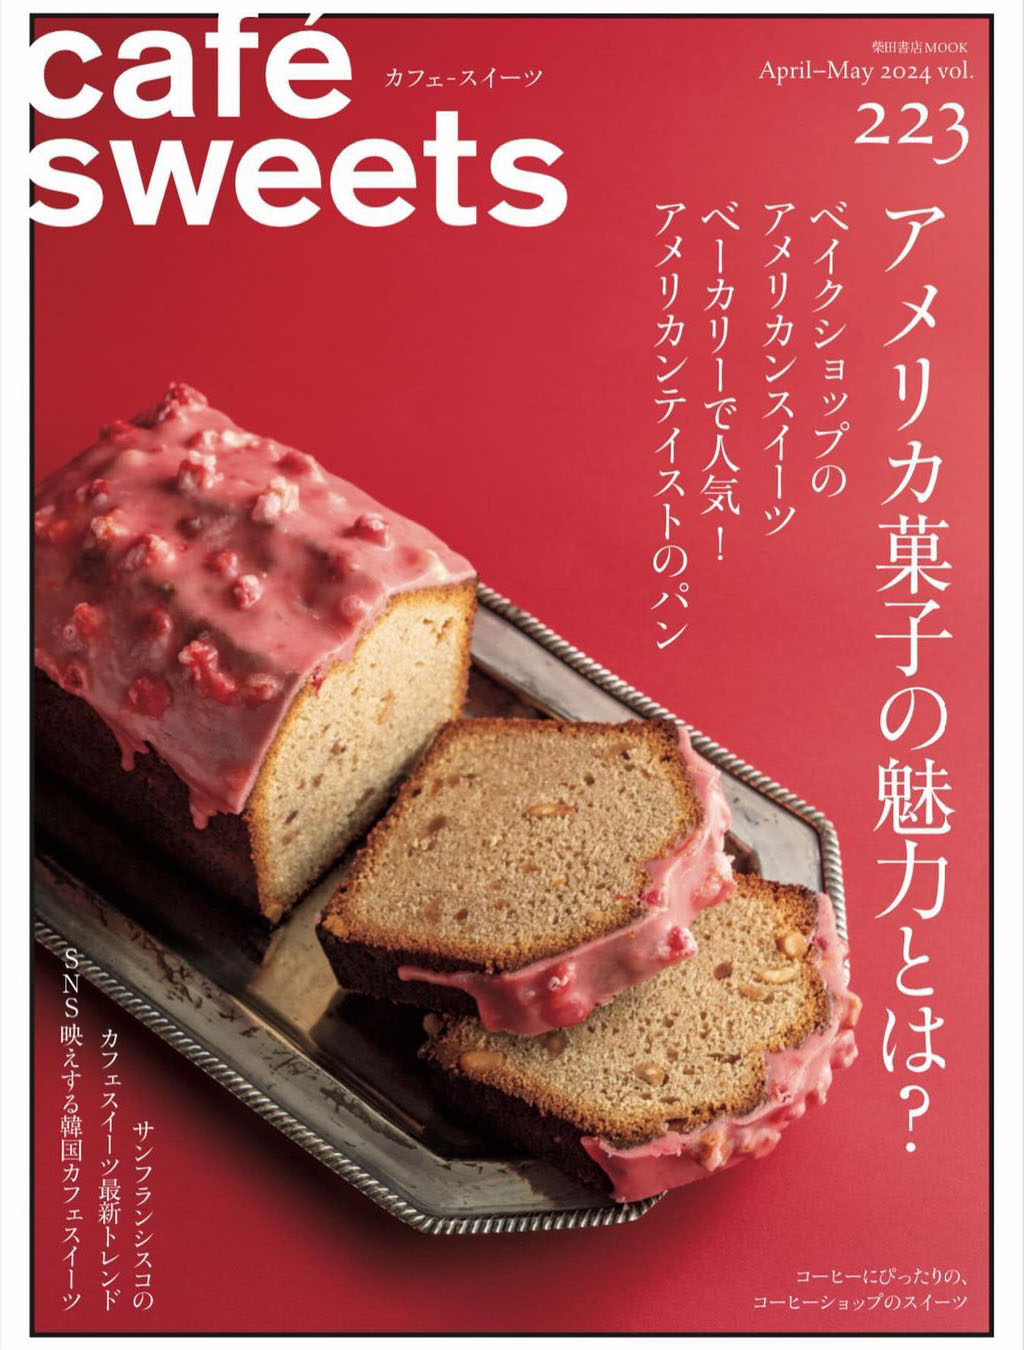 『cafe-sweets』vol.223にてBONTEMPSアメリカ村本店が紹介されました。